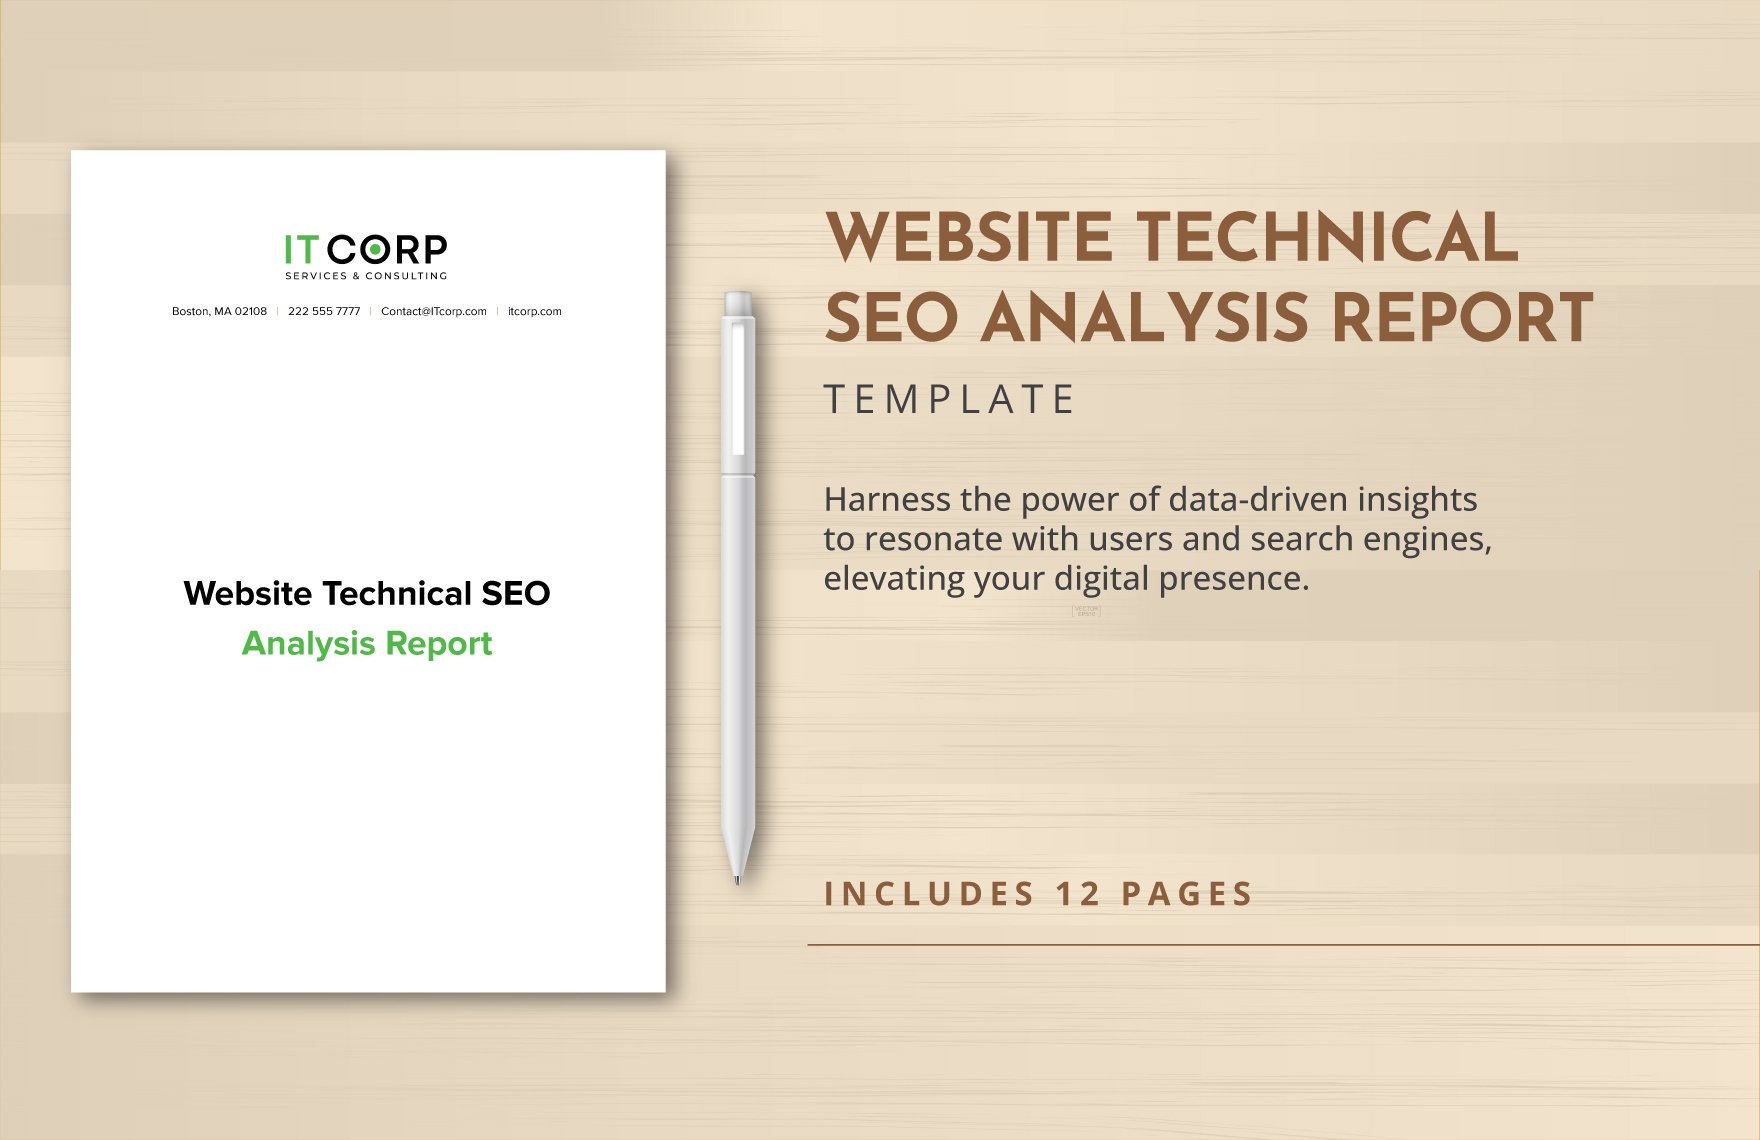 Website Technical SEO Analysis Report Template